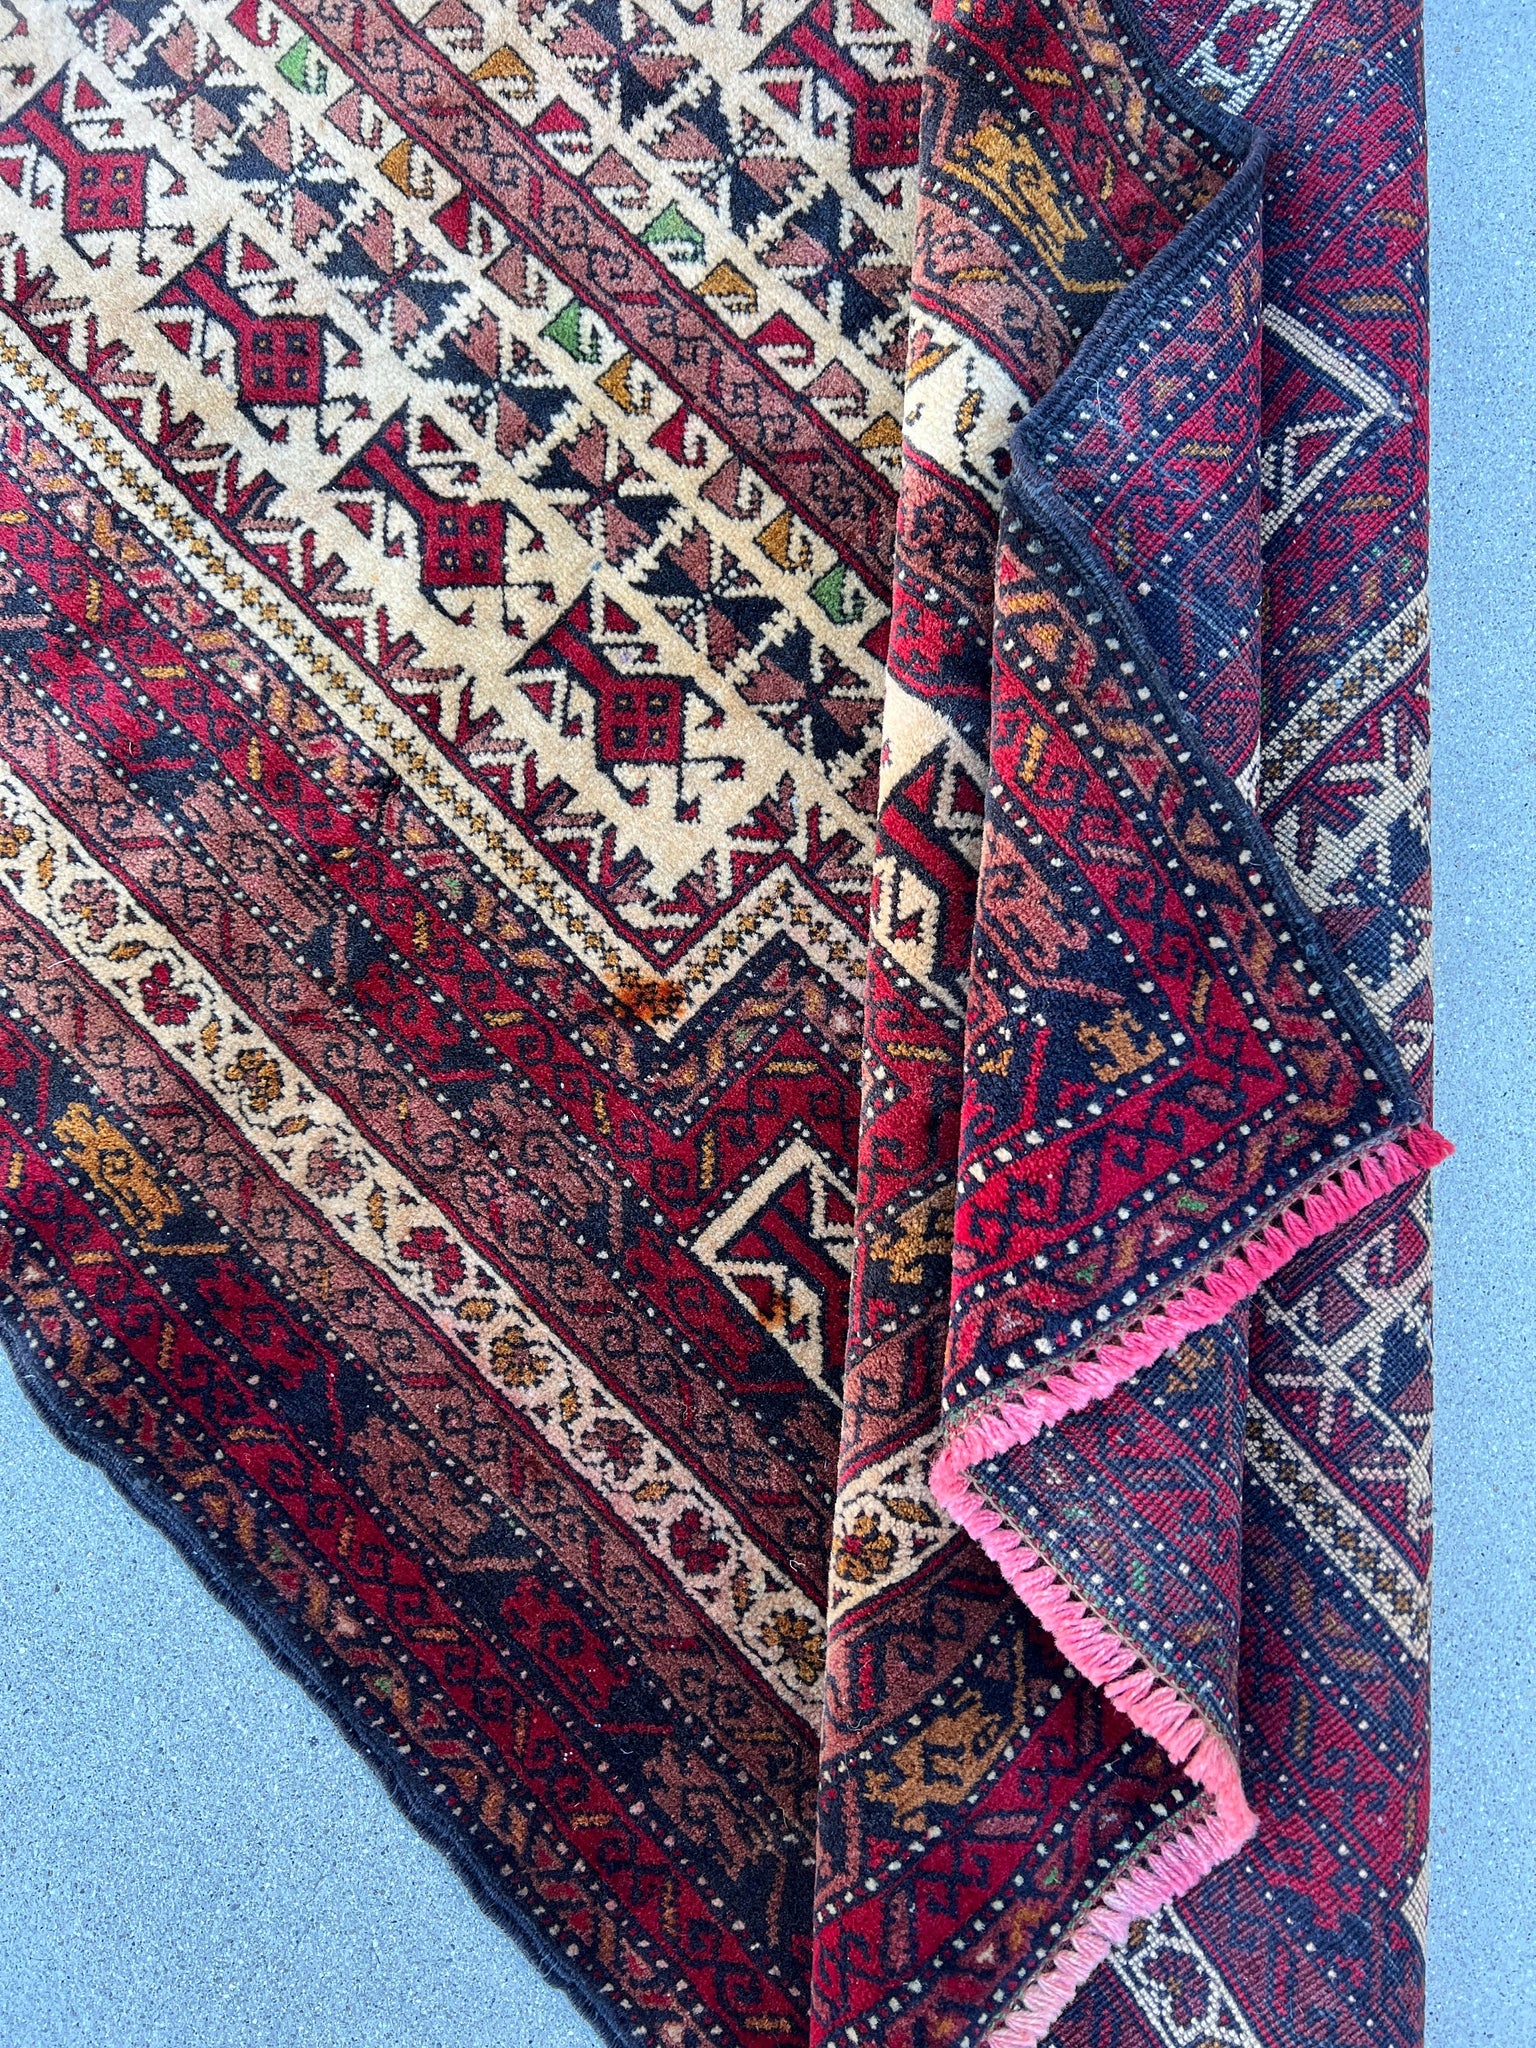 3x5 (100x180) Handmade Afghan Rug | Cherry Red Midnight Blue Cream Beige Orange Black Ivory Brick Red Green | Nomadic Baluch Boho